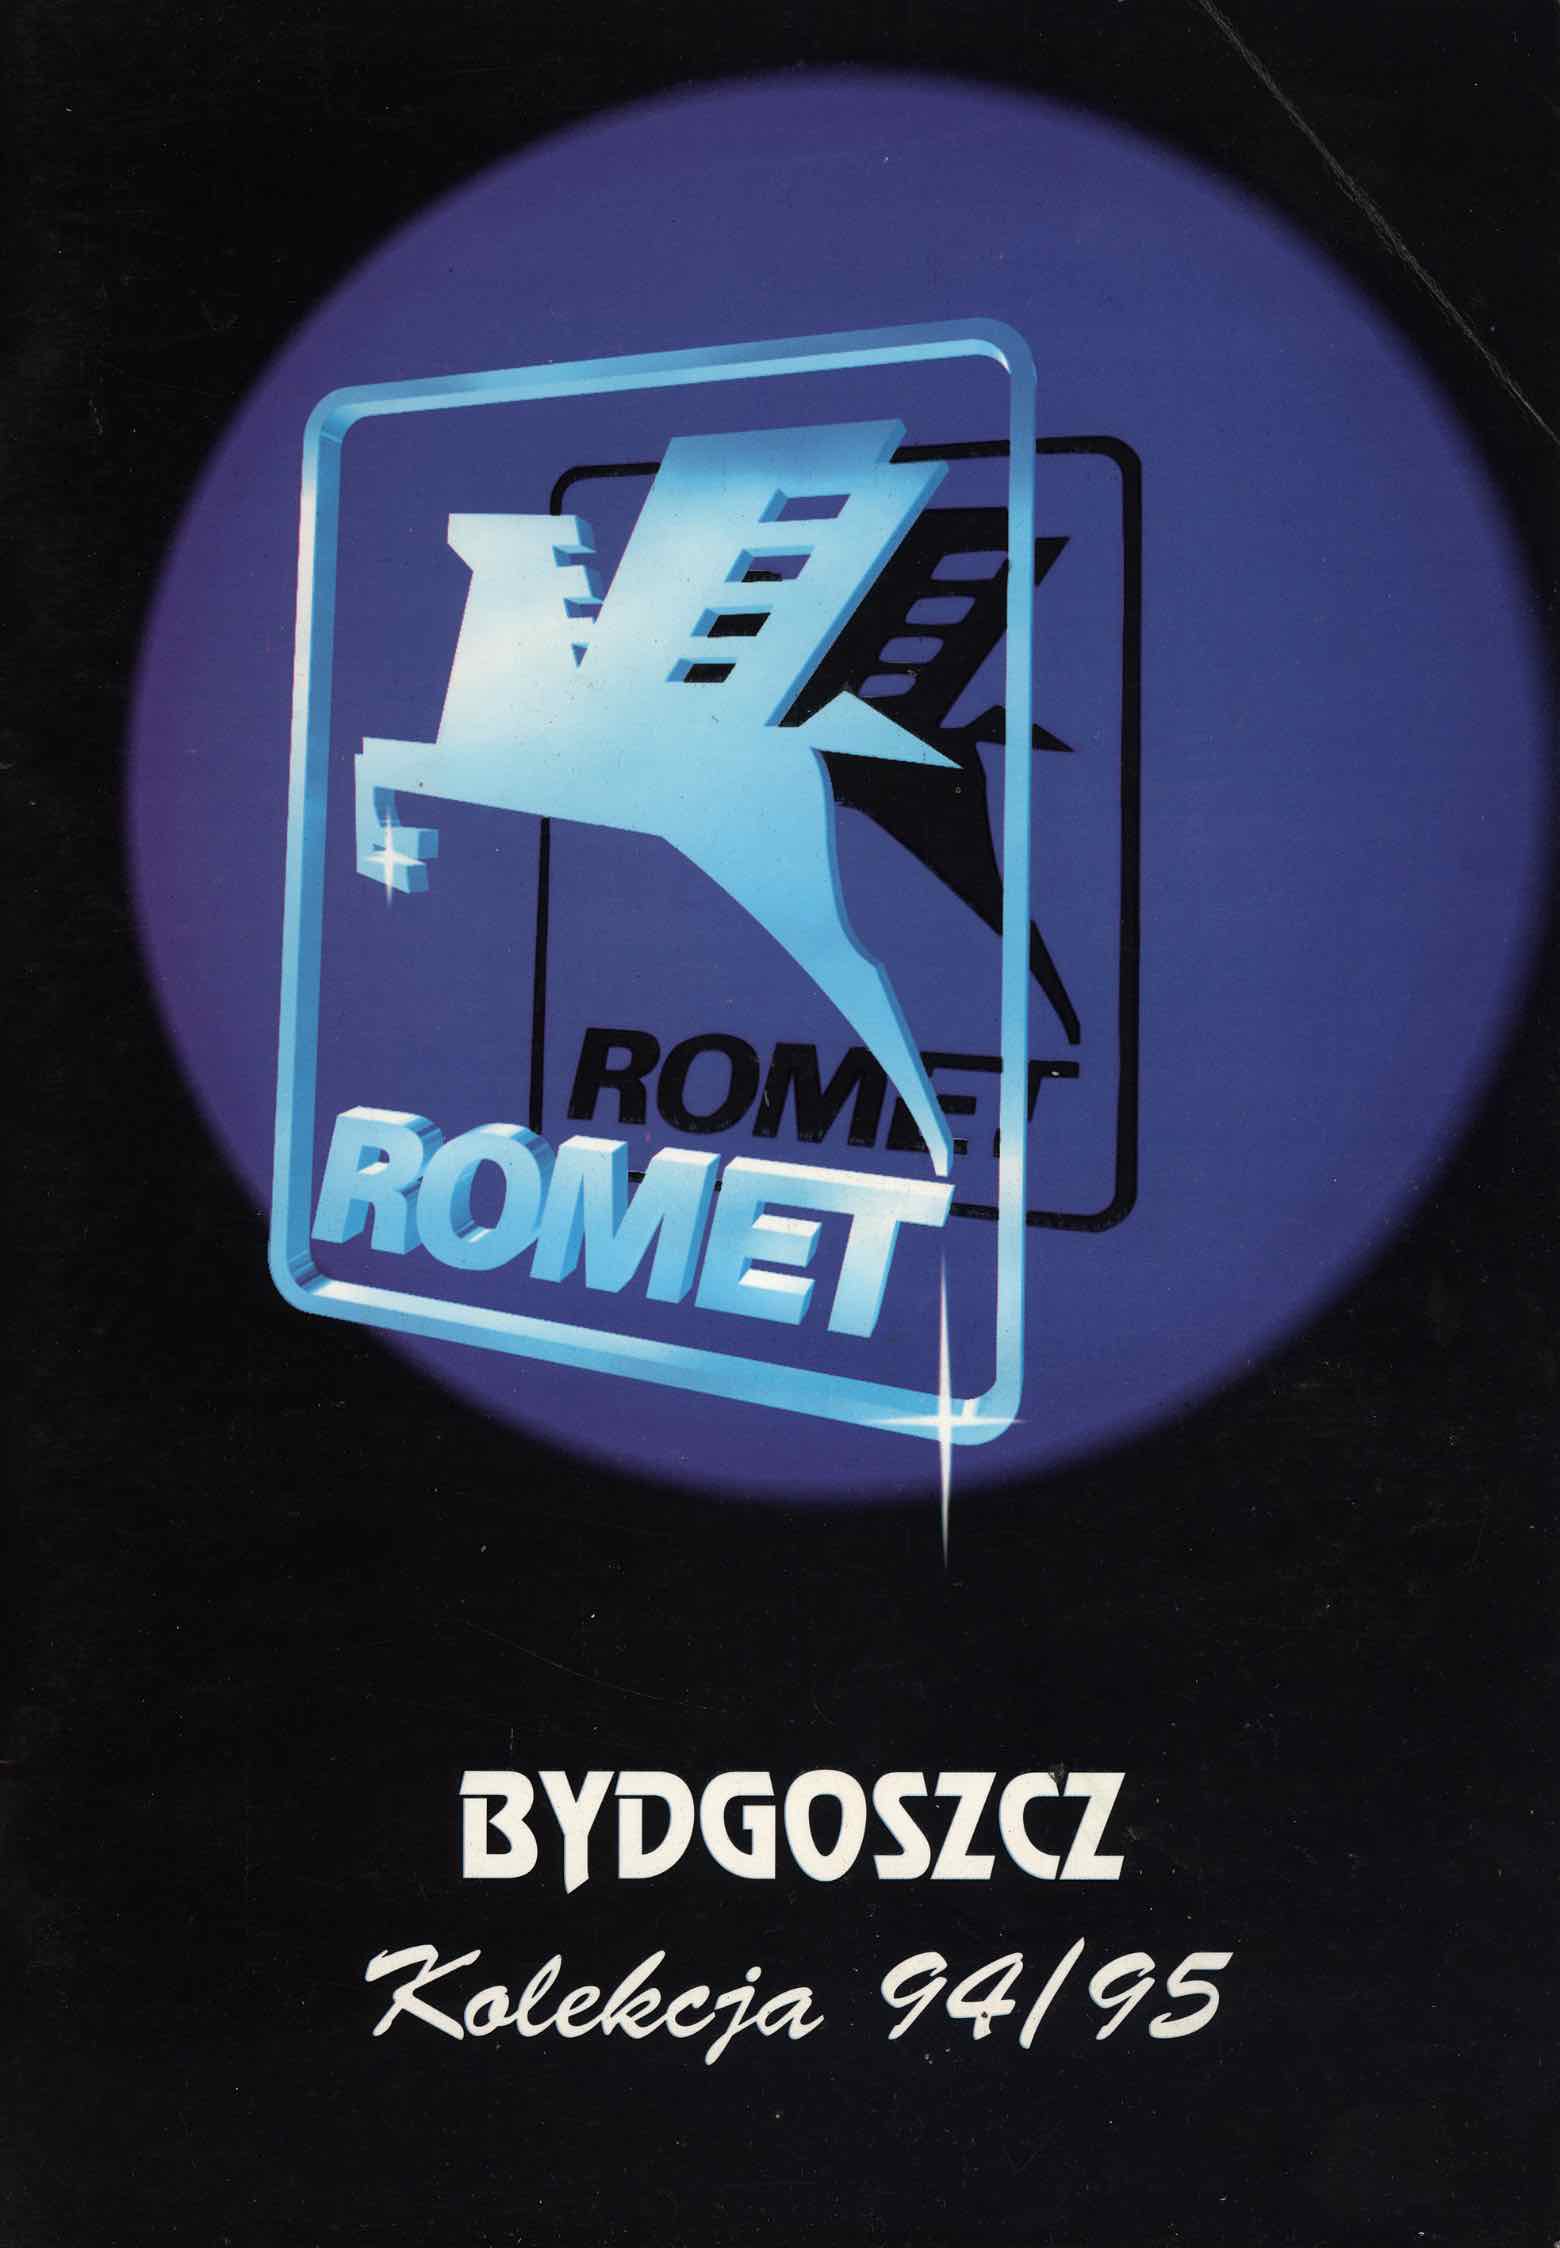 Romet Bydgoszcz - Kolekcja 94-95 front cover main image